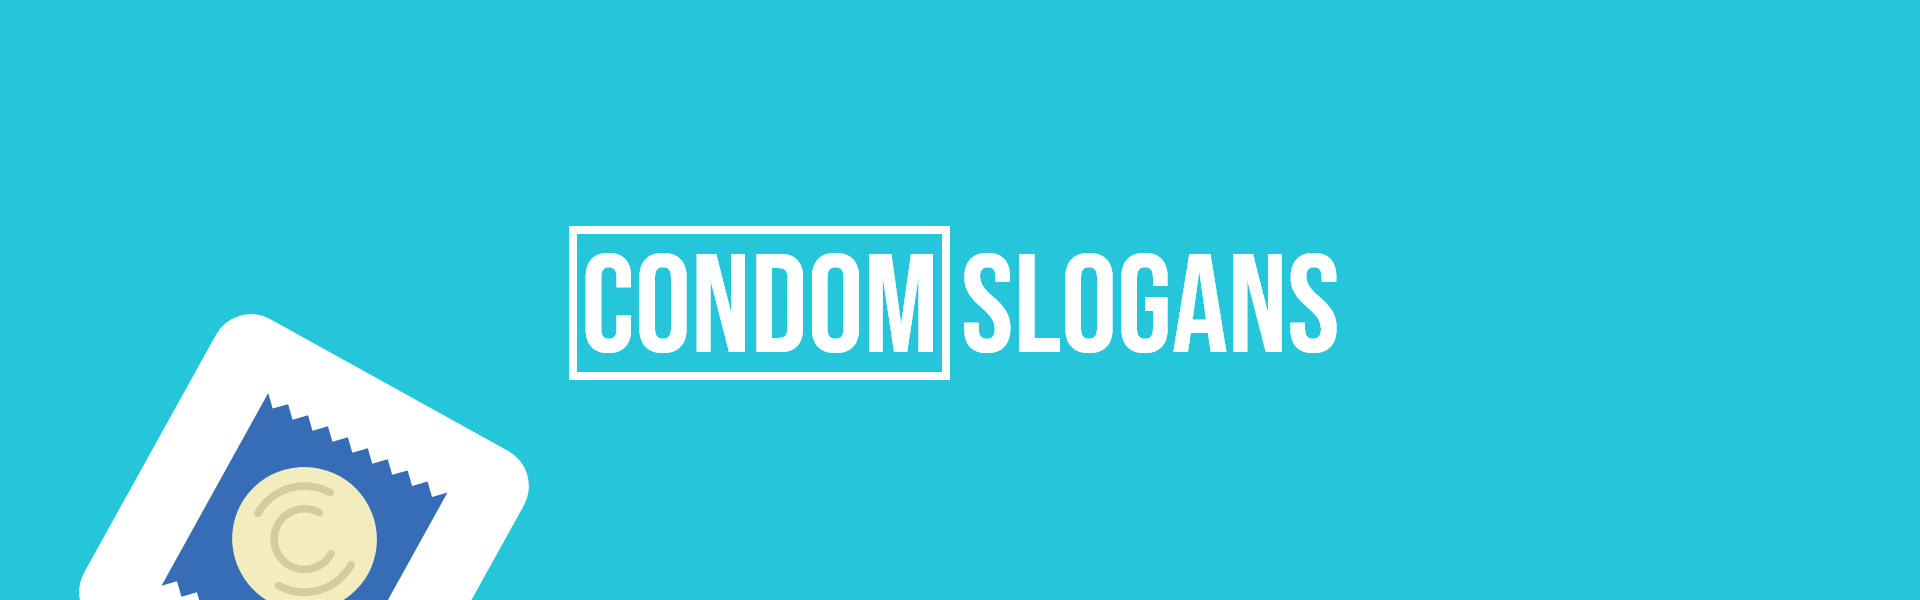 condom slogans taglines